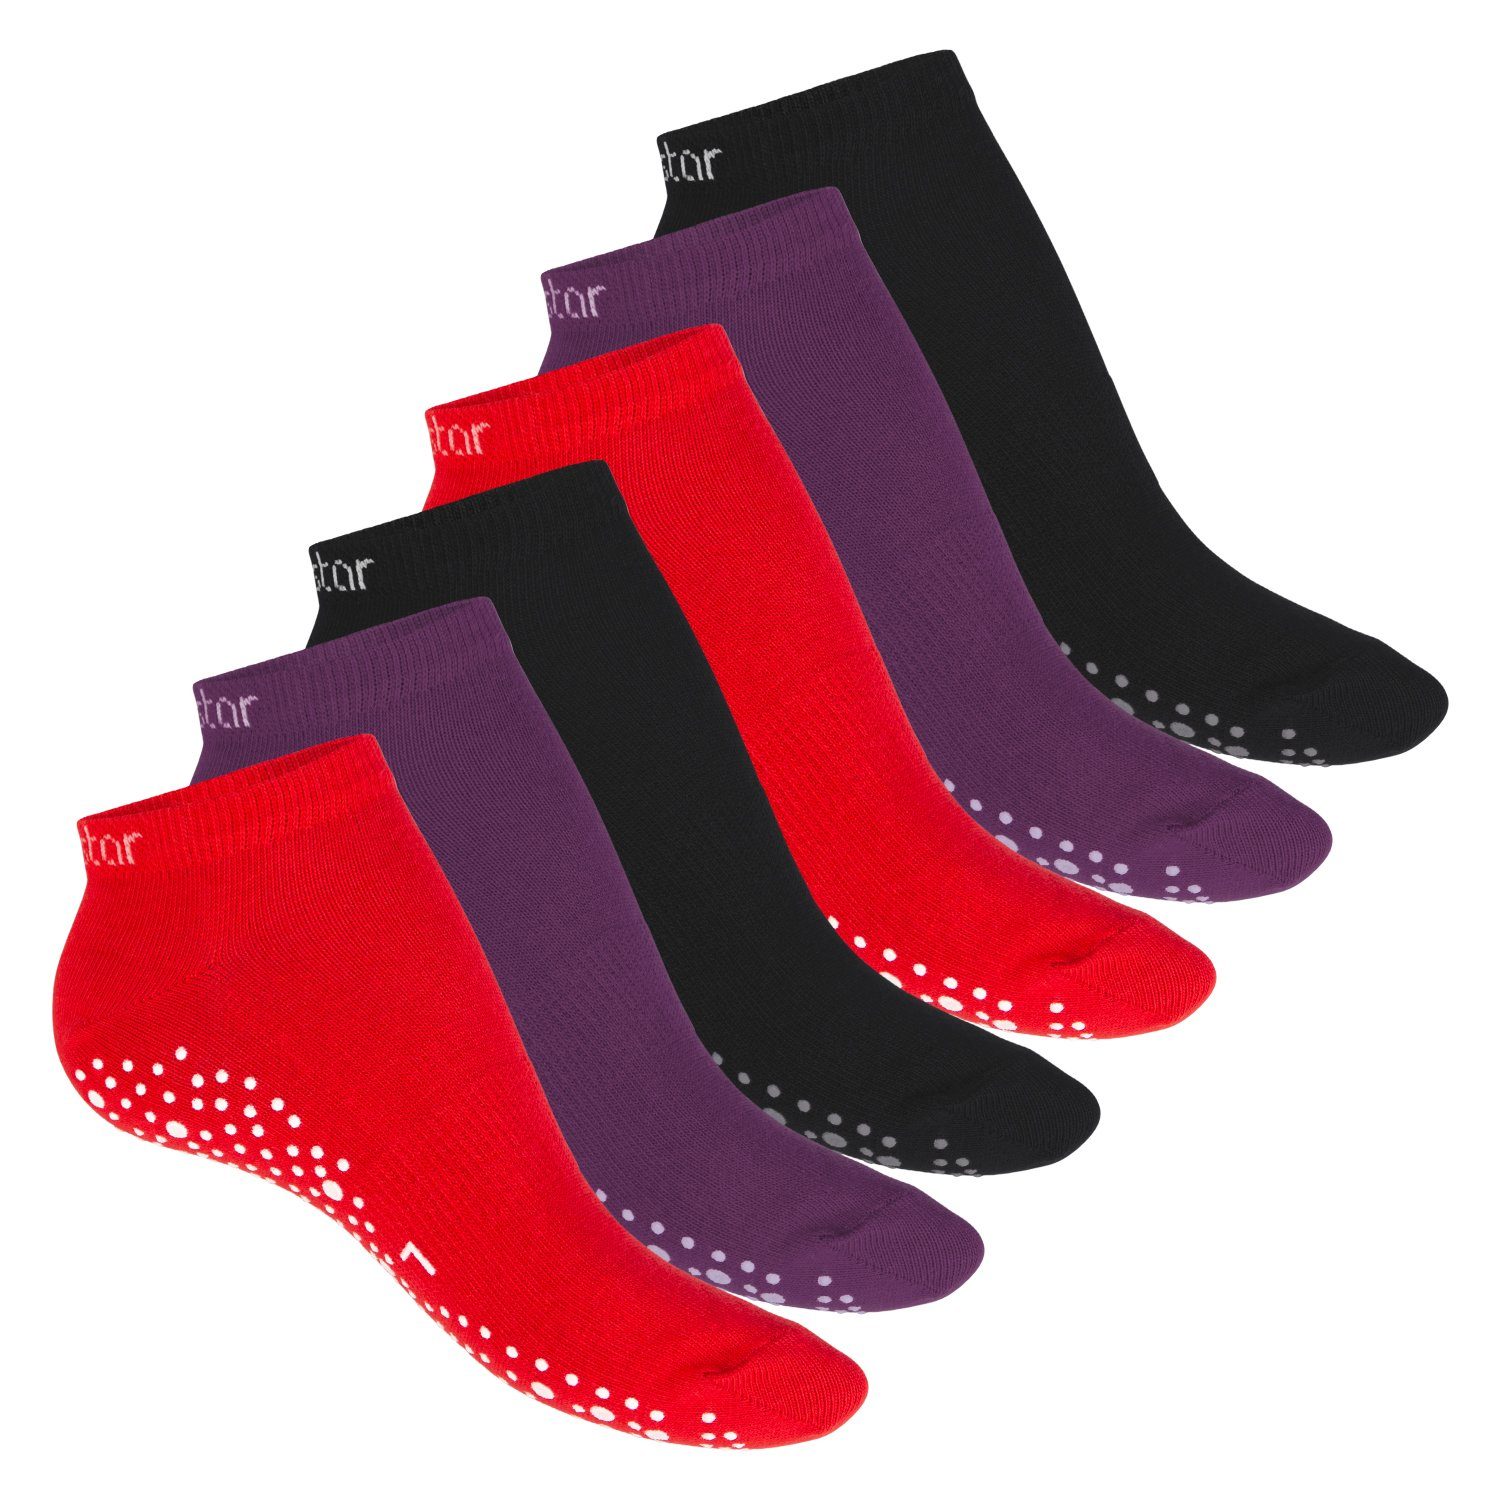 celodoro Sportsocken Damen Pilates & Yoga Sneaker Socken mit ABS (6 Paar) Berry